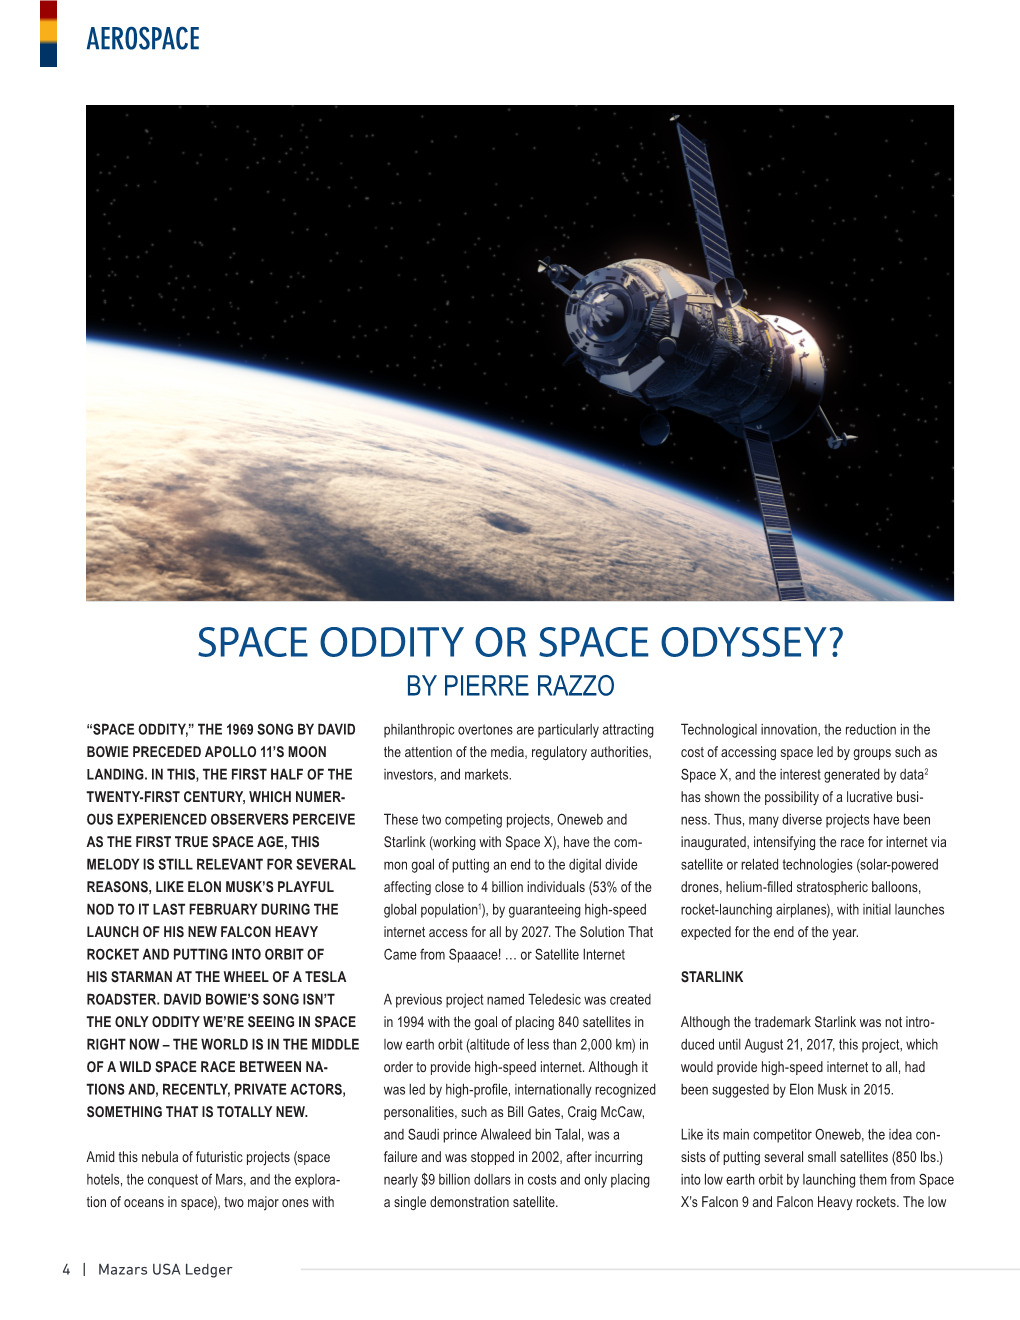 Space Oddity Or Space Odyssey? by Pierre Razzo